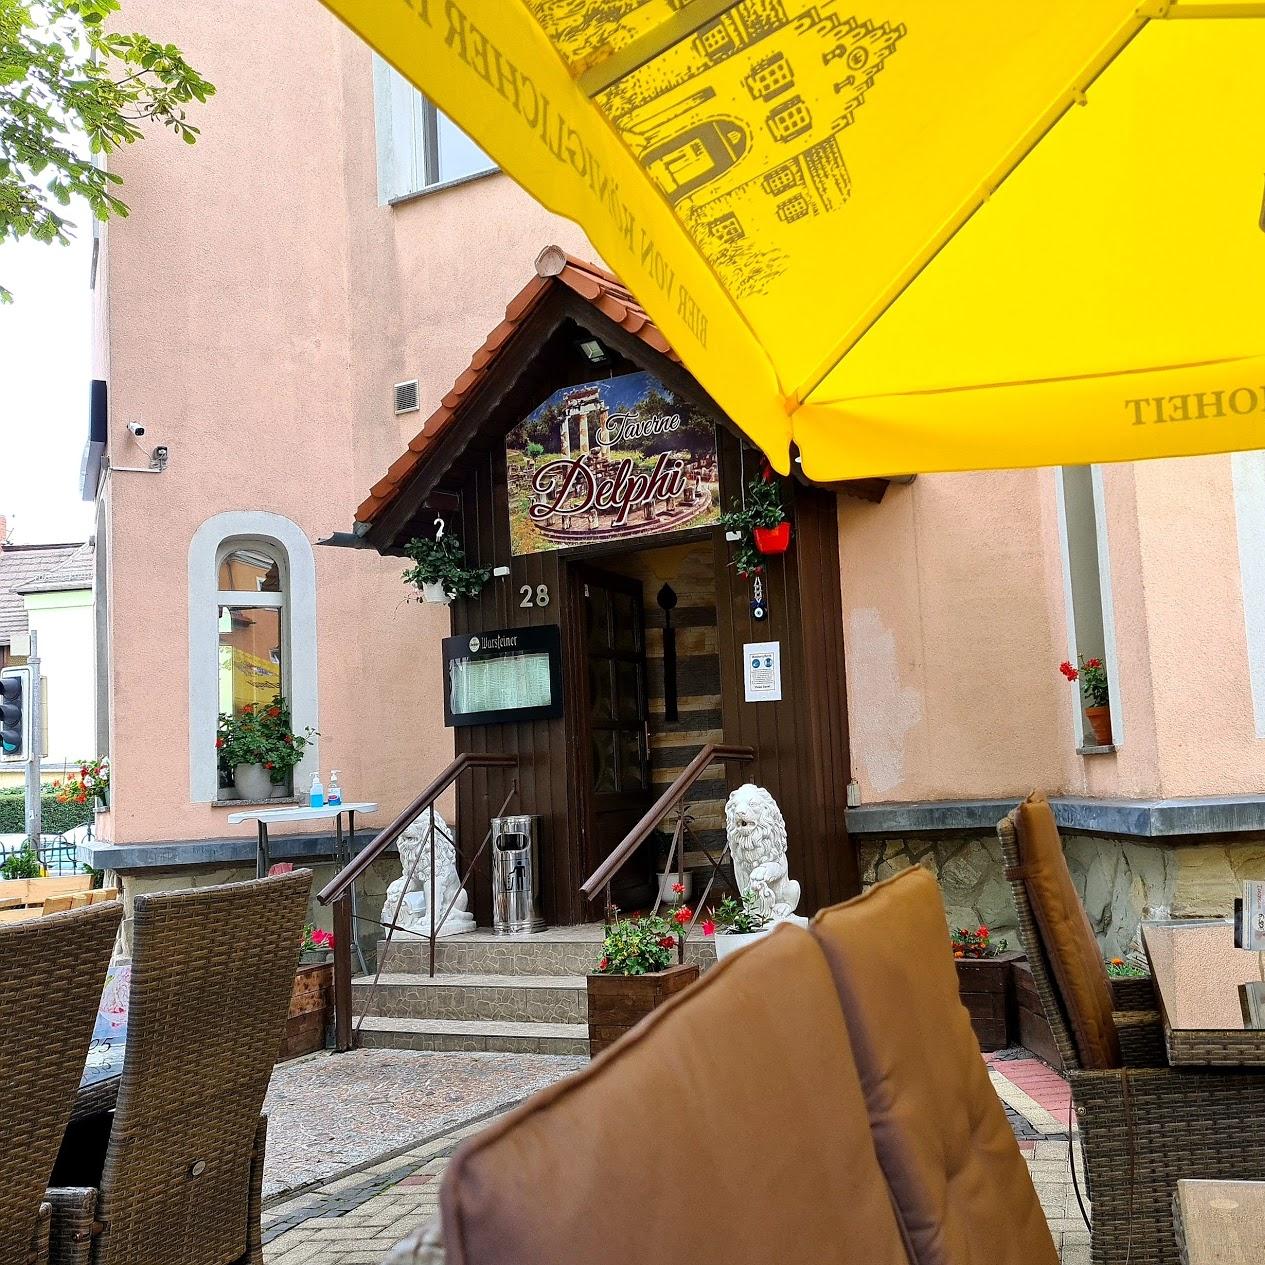 Restaurant "Delphi-Taverne" in Naumburg (Saale)